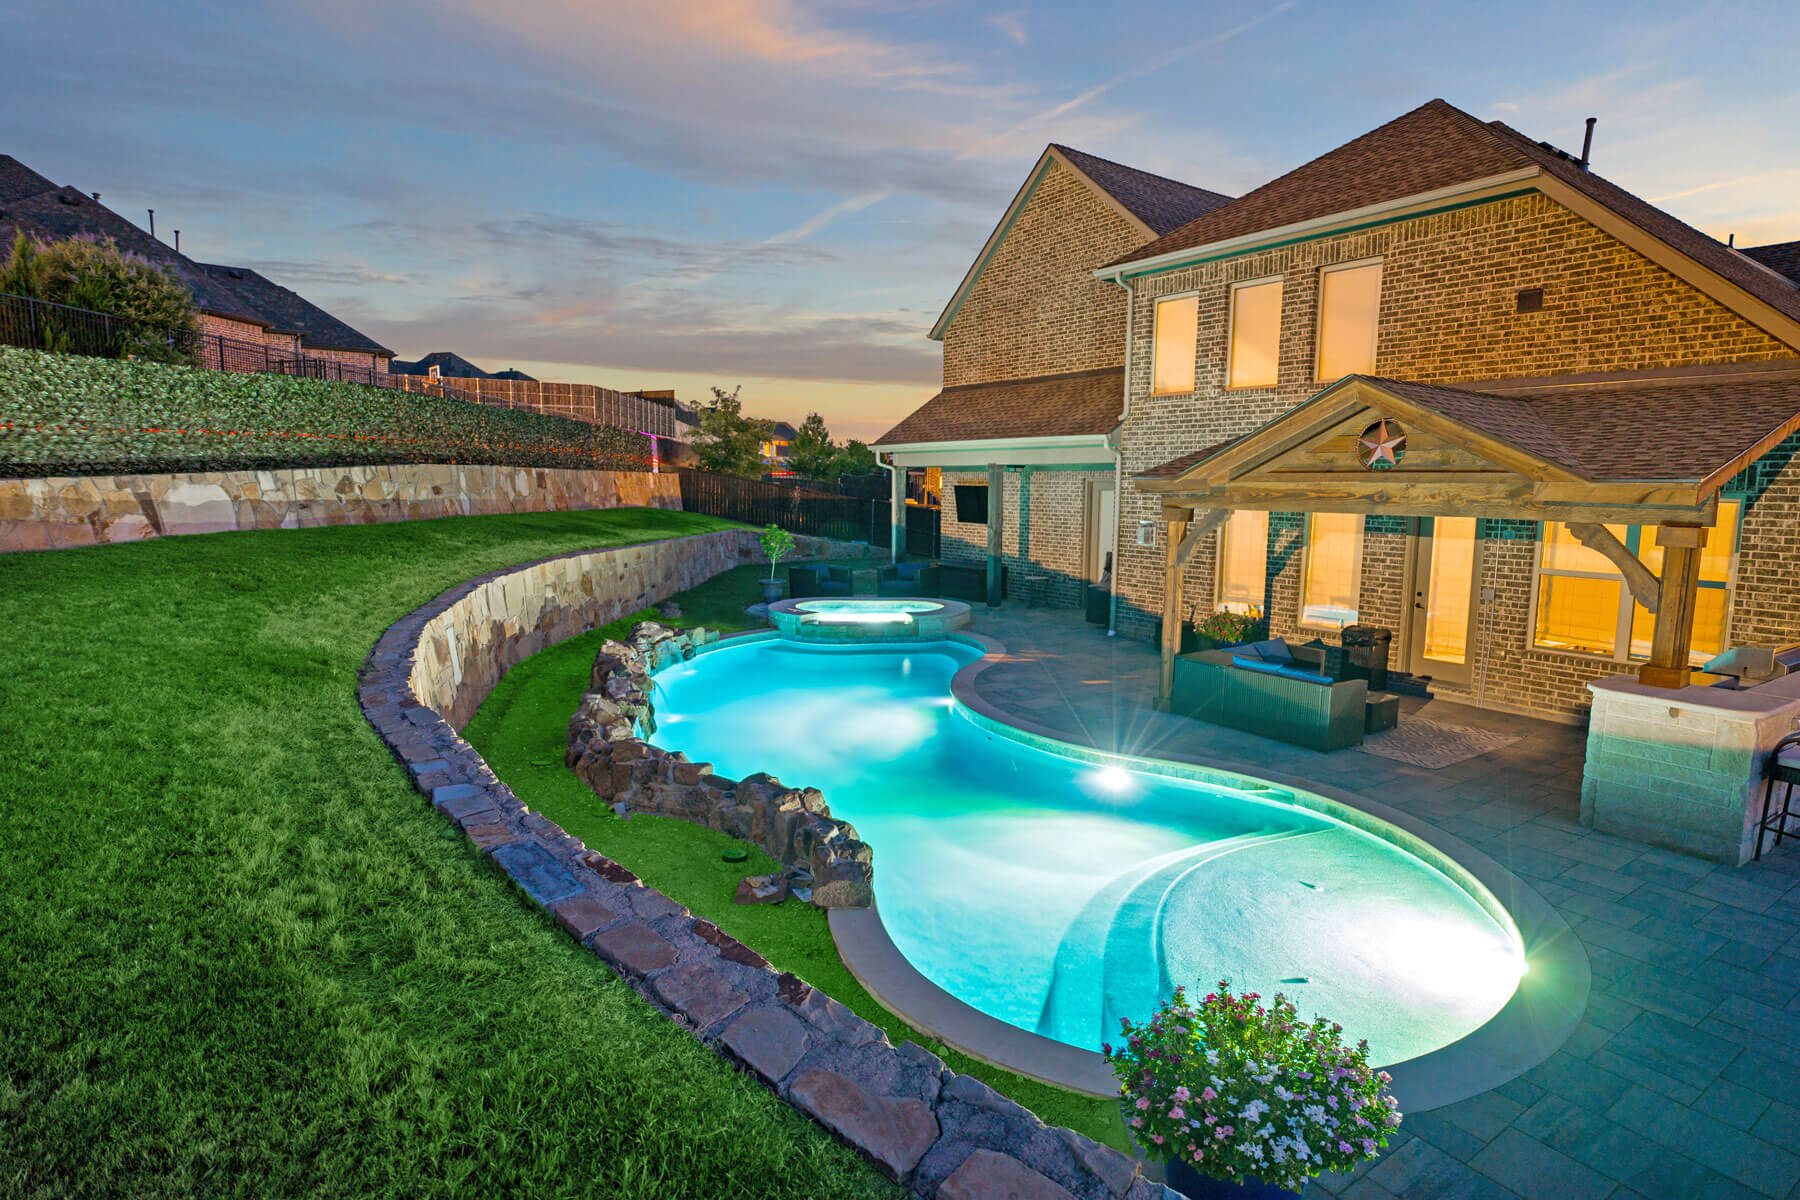 Locate your next Custom Swimming Pool Builder in Frisco TX